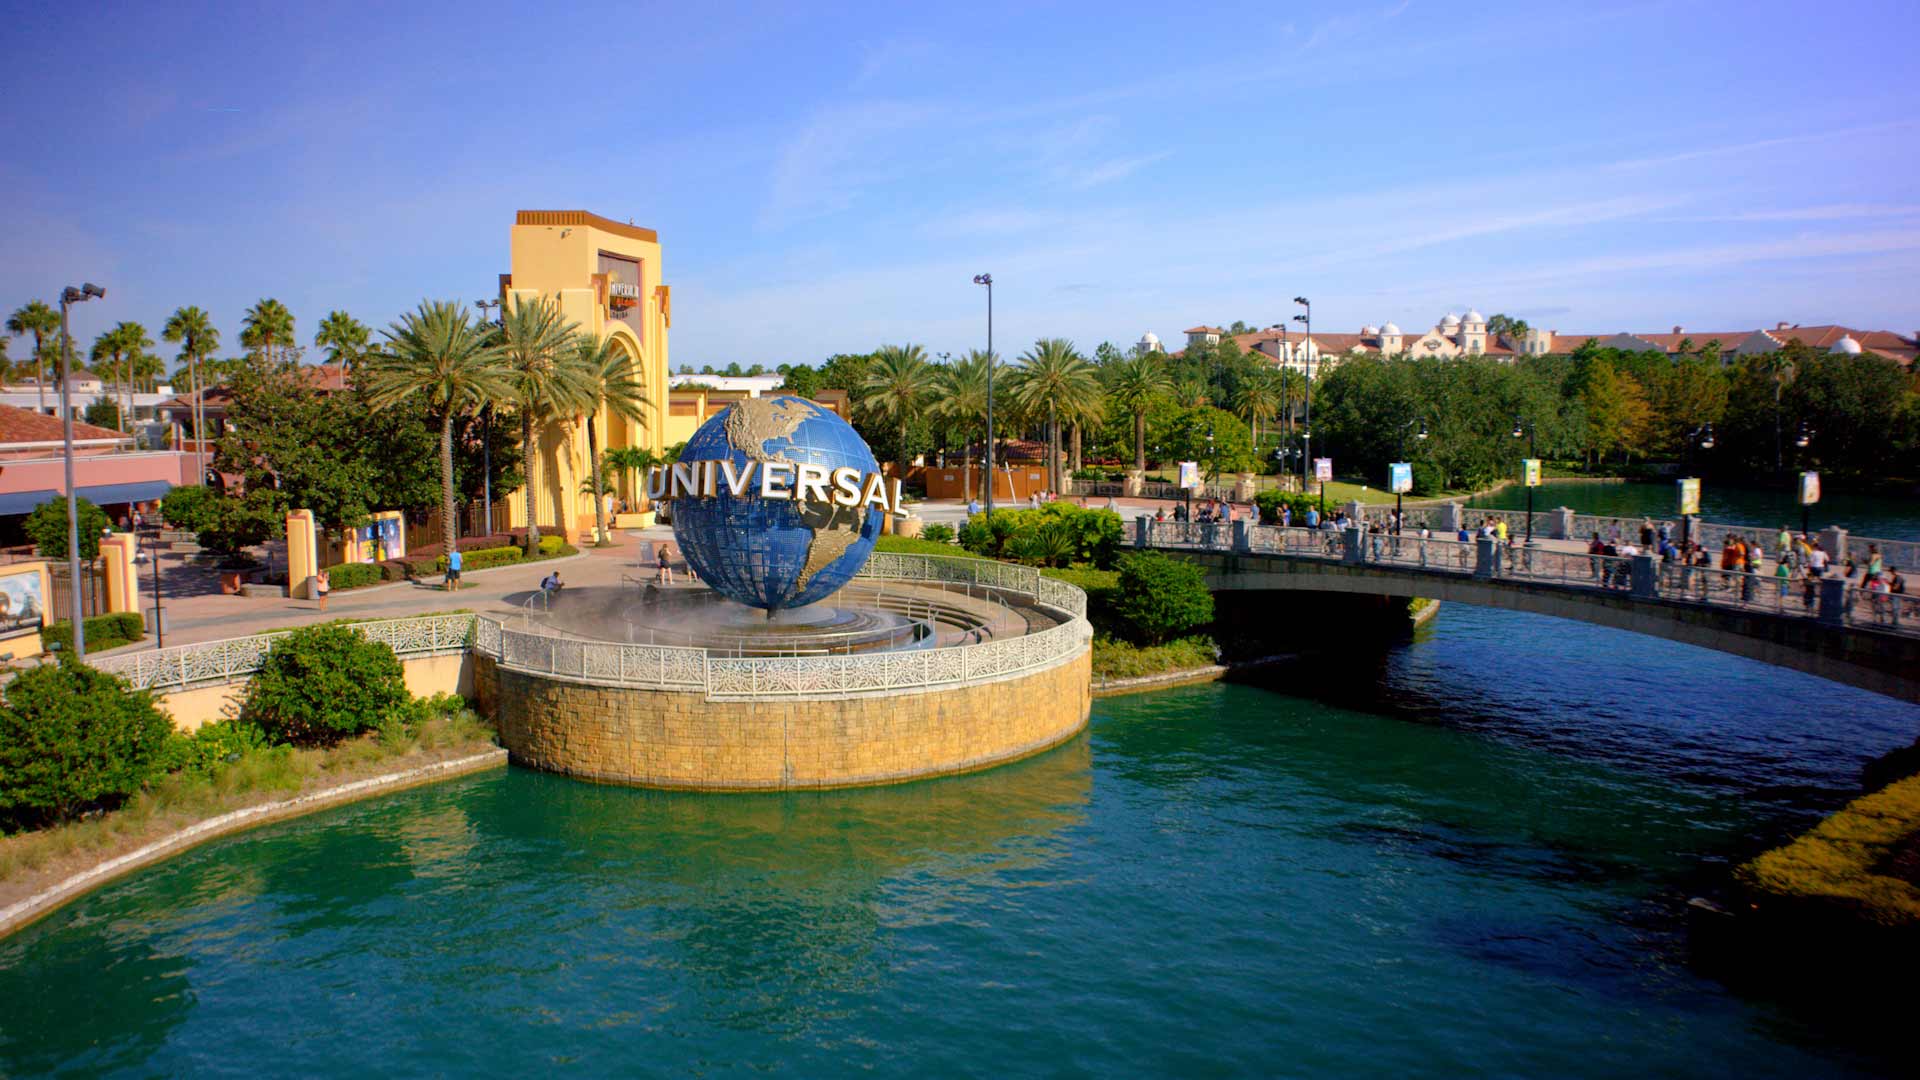 Universal Studios Florida globe at theme park entrance